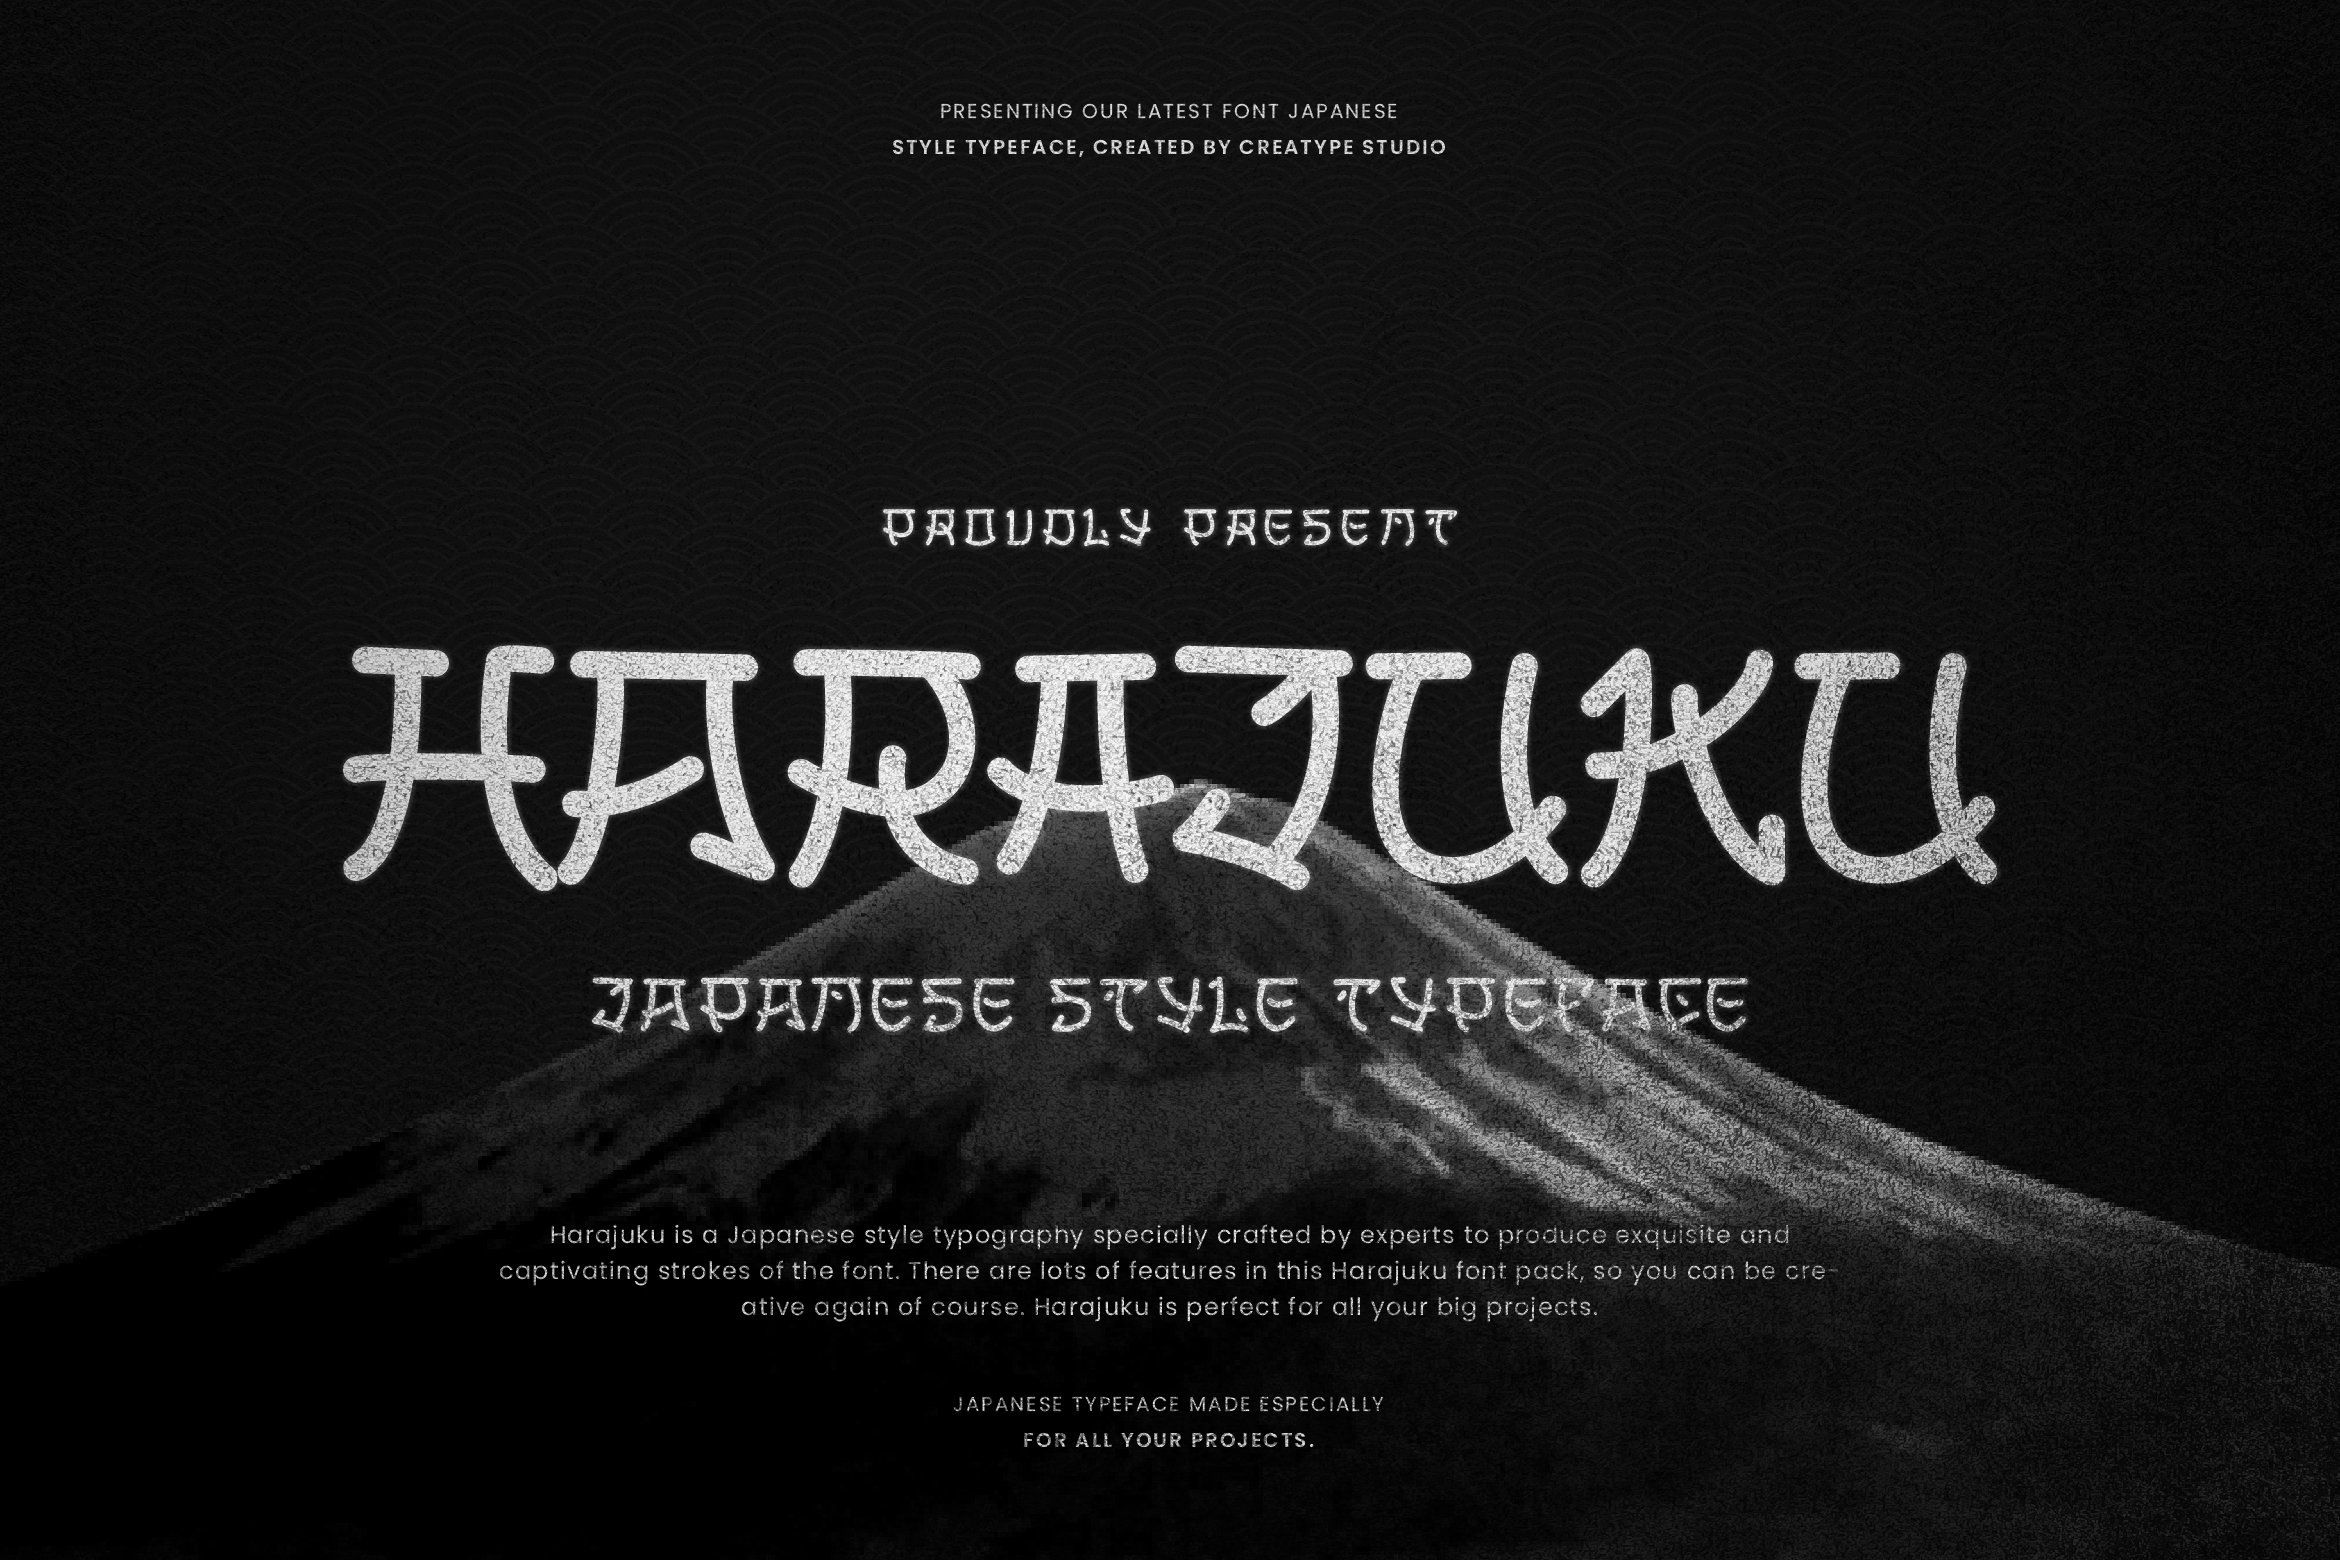 Harajuku Japanese Business Font cover image.